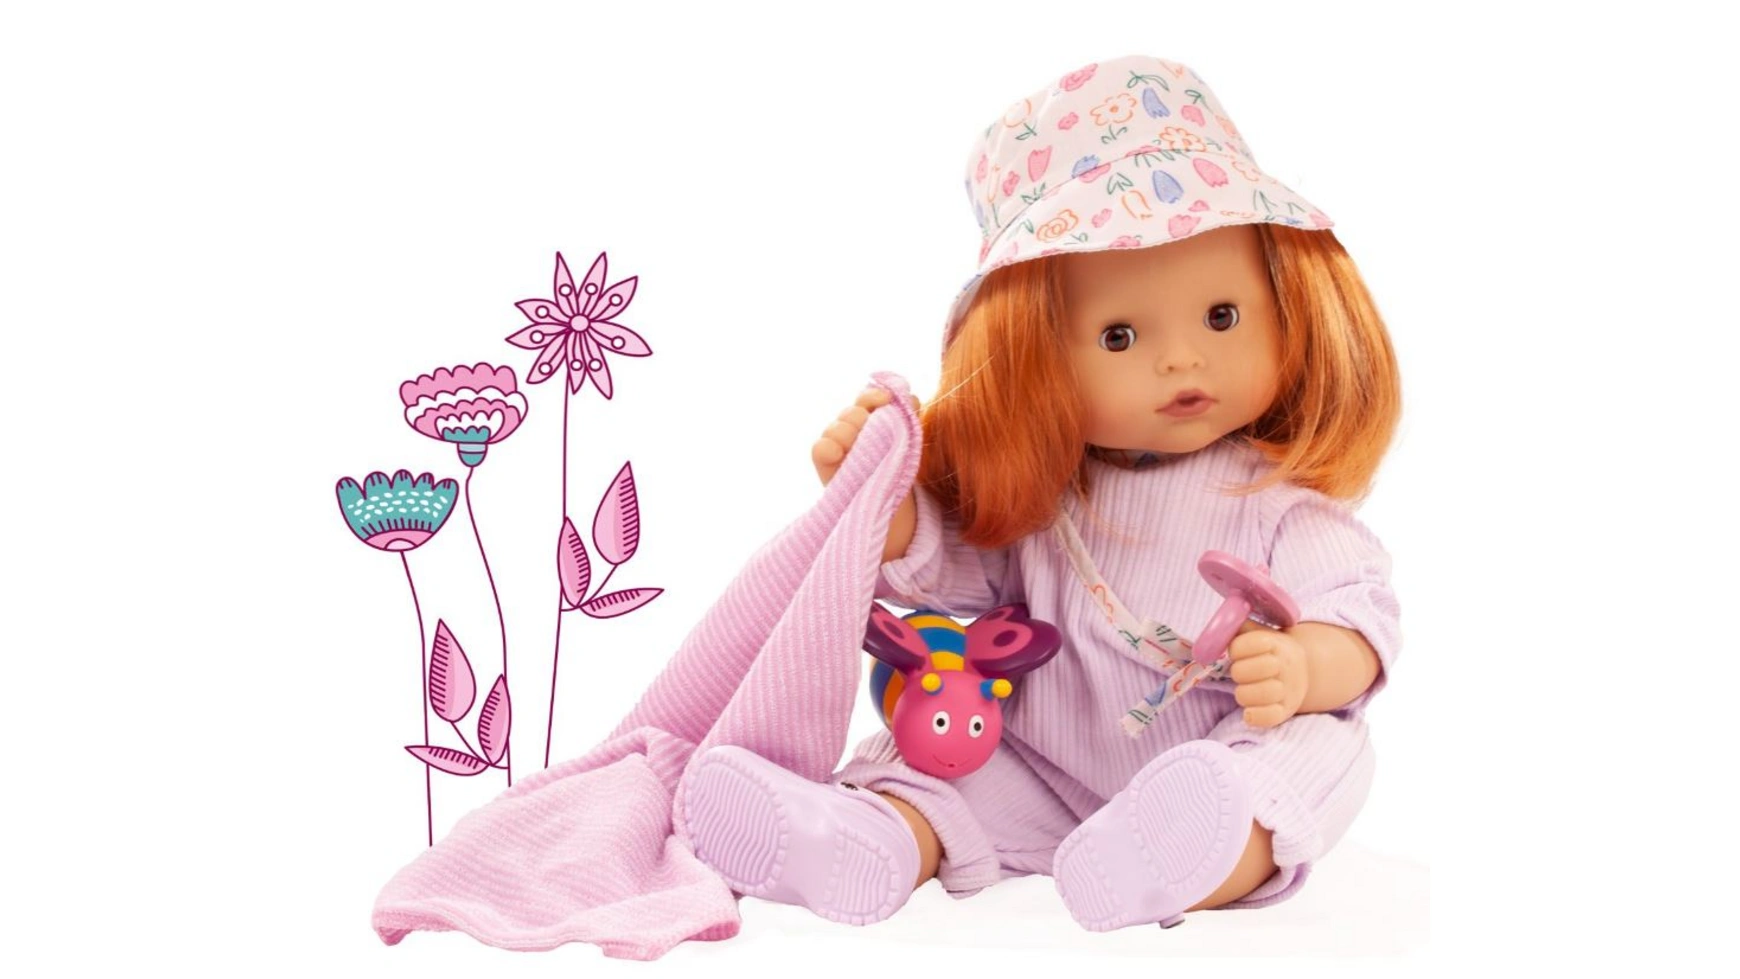 Maxy aquini bliblablume, кукла для ванны, 42 см Götz Puppenmanufaktur